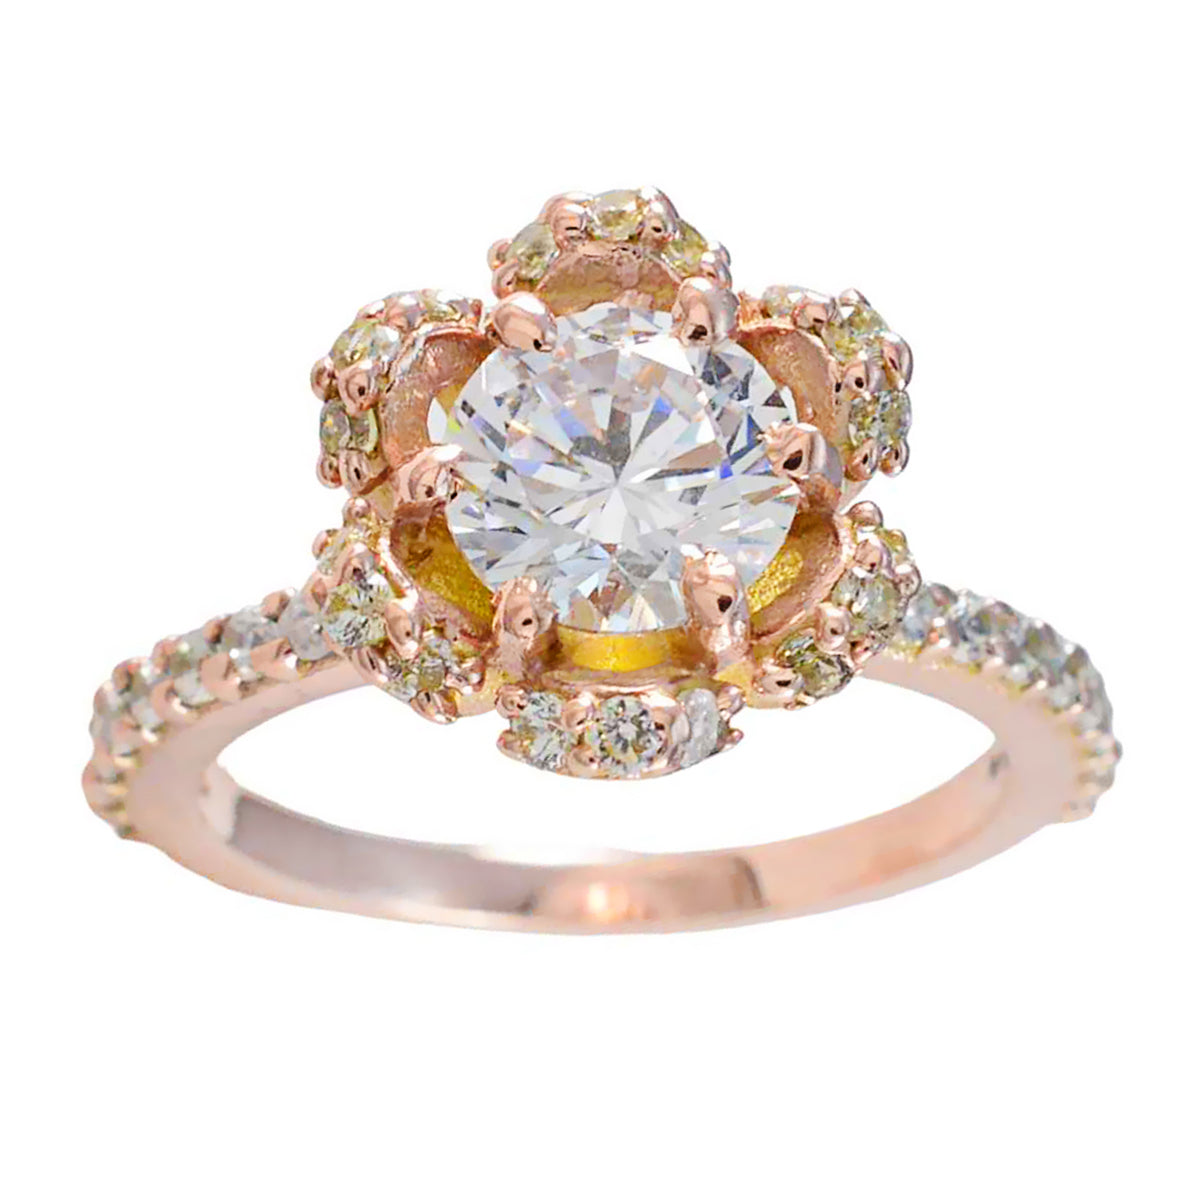 Hermoso anillo de plata riyo con chapado en oro rosa, piedra blanca cz, ajuste de punta redonda, joyería de moda, anillo de boda